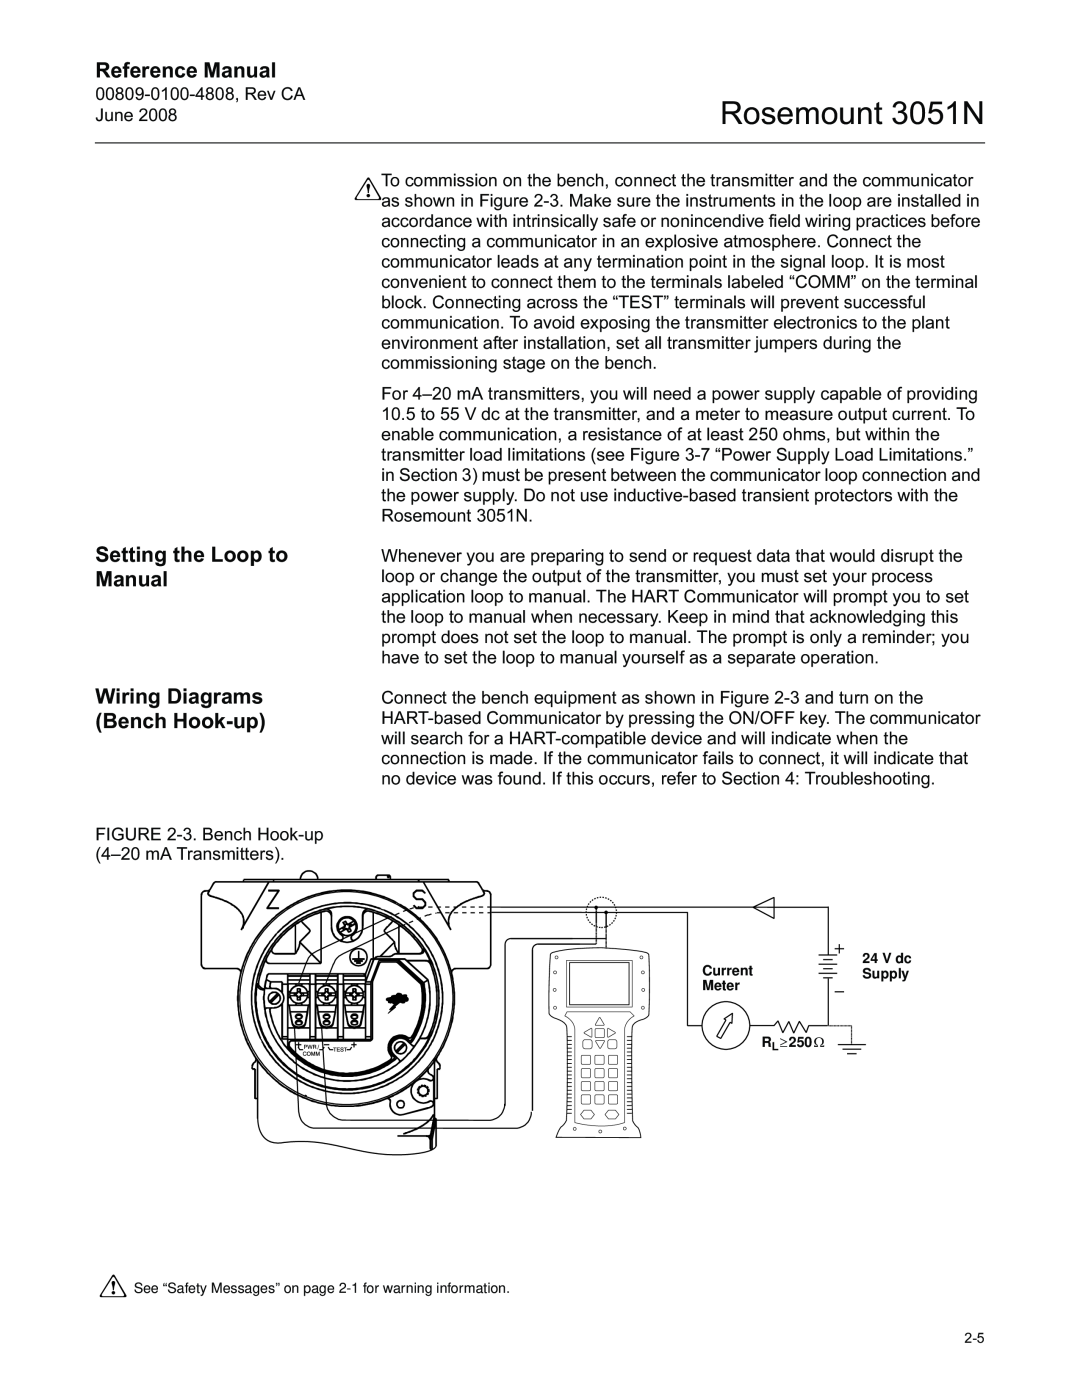 Emerson manual Setting the Loop to Manual, Wiring Diagrams Bench Hook-up, Rosemount 3051N, Reference Manual 